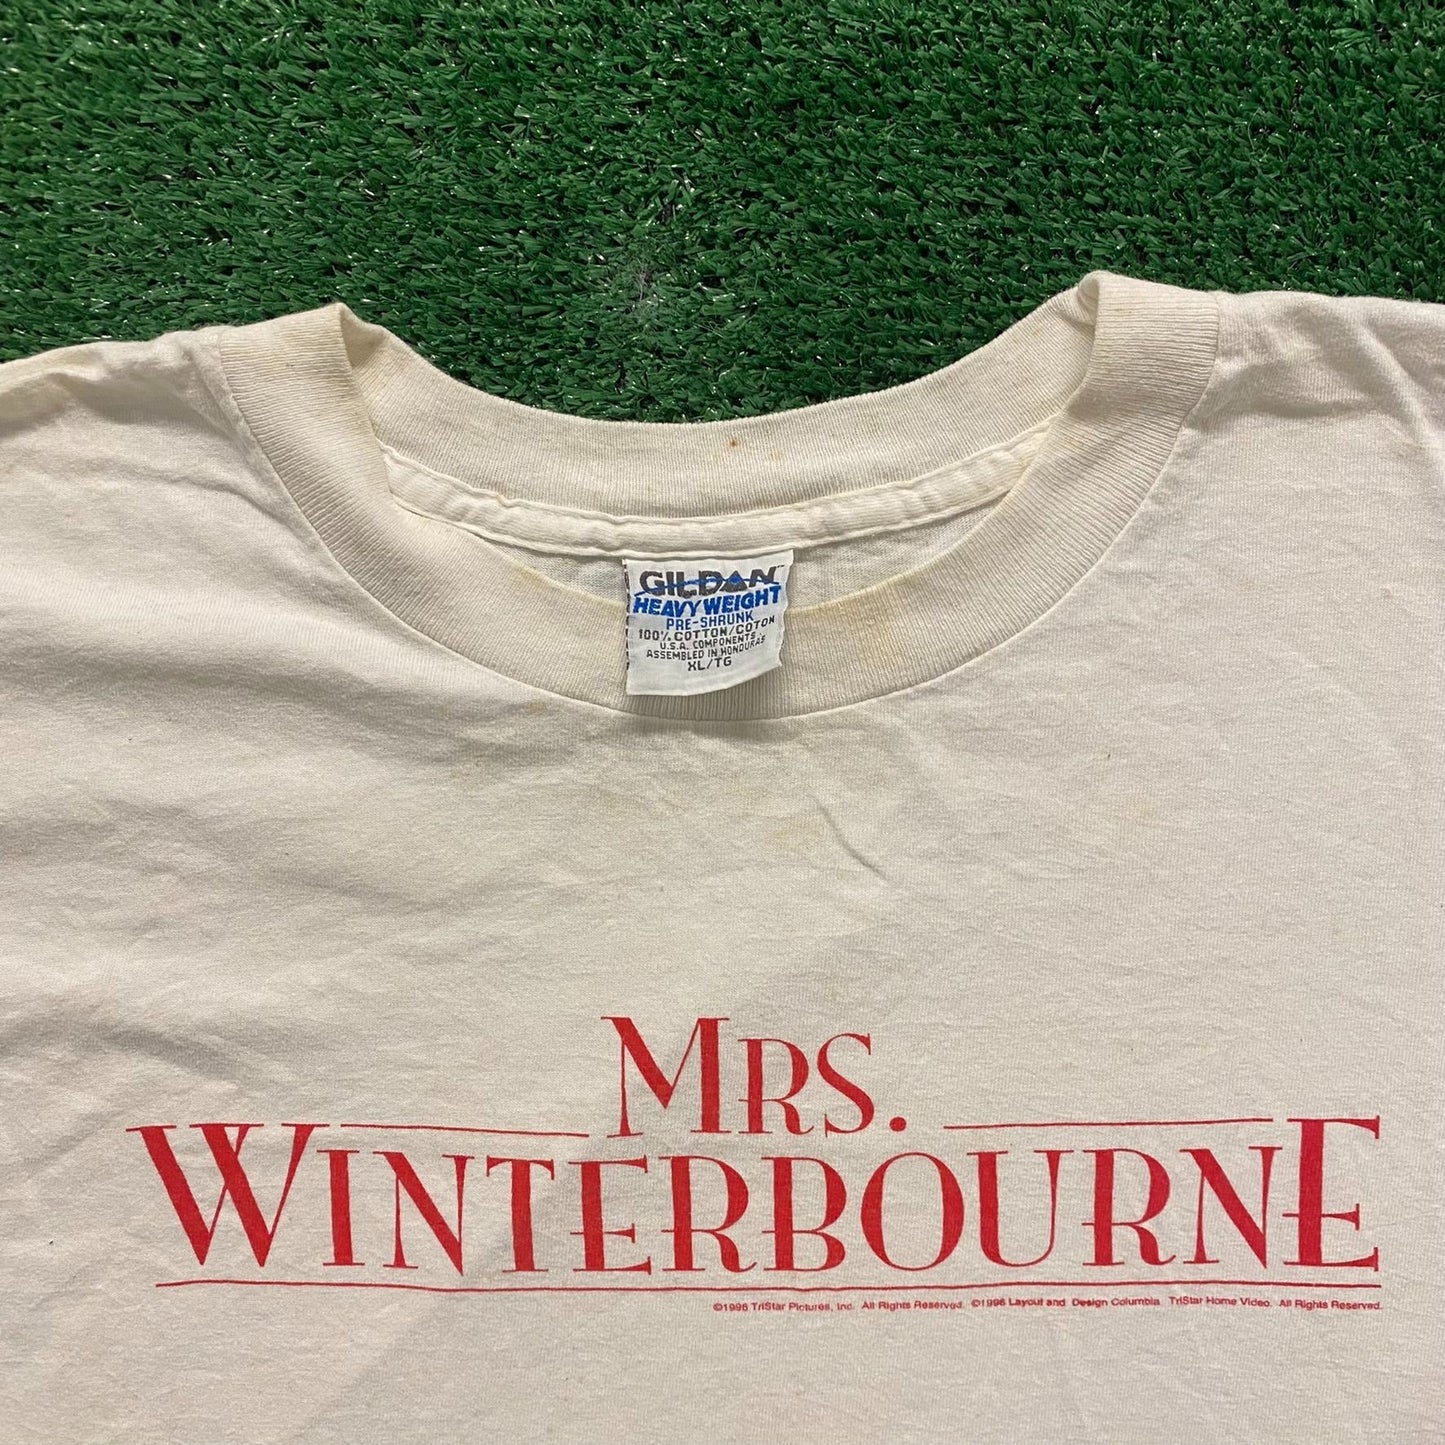 Mrs. Winterbourne Vintage 90s Movie T-Shirt